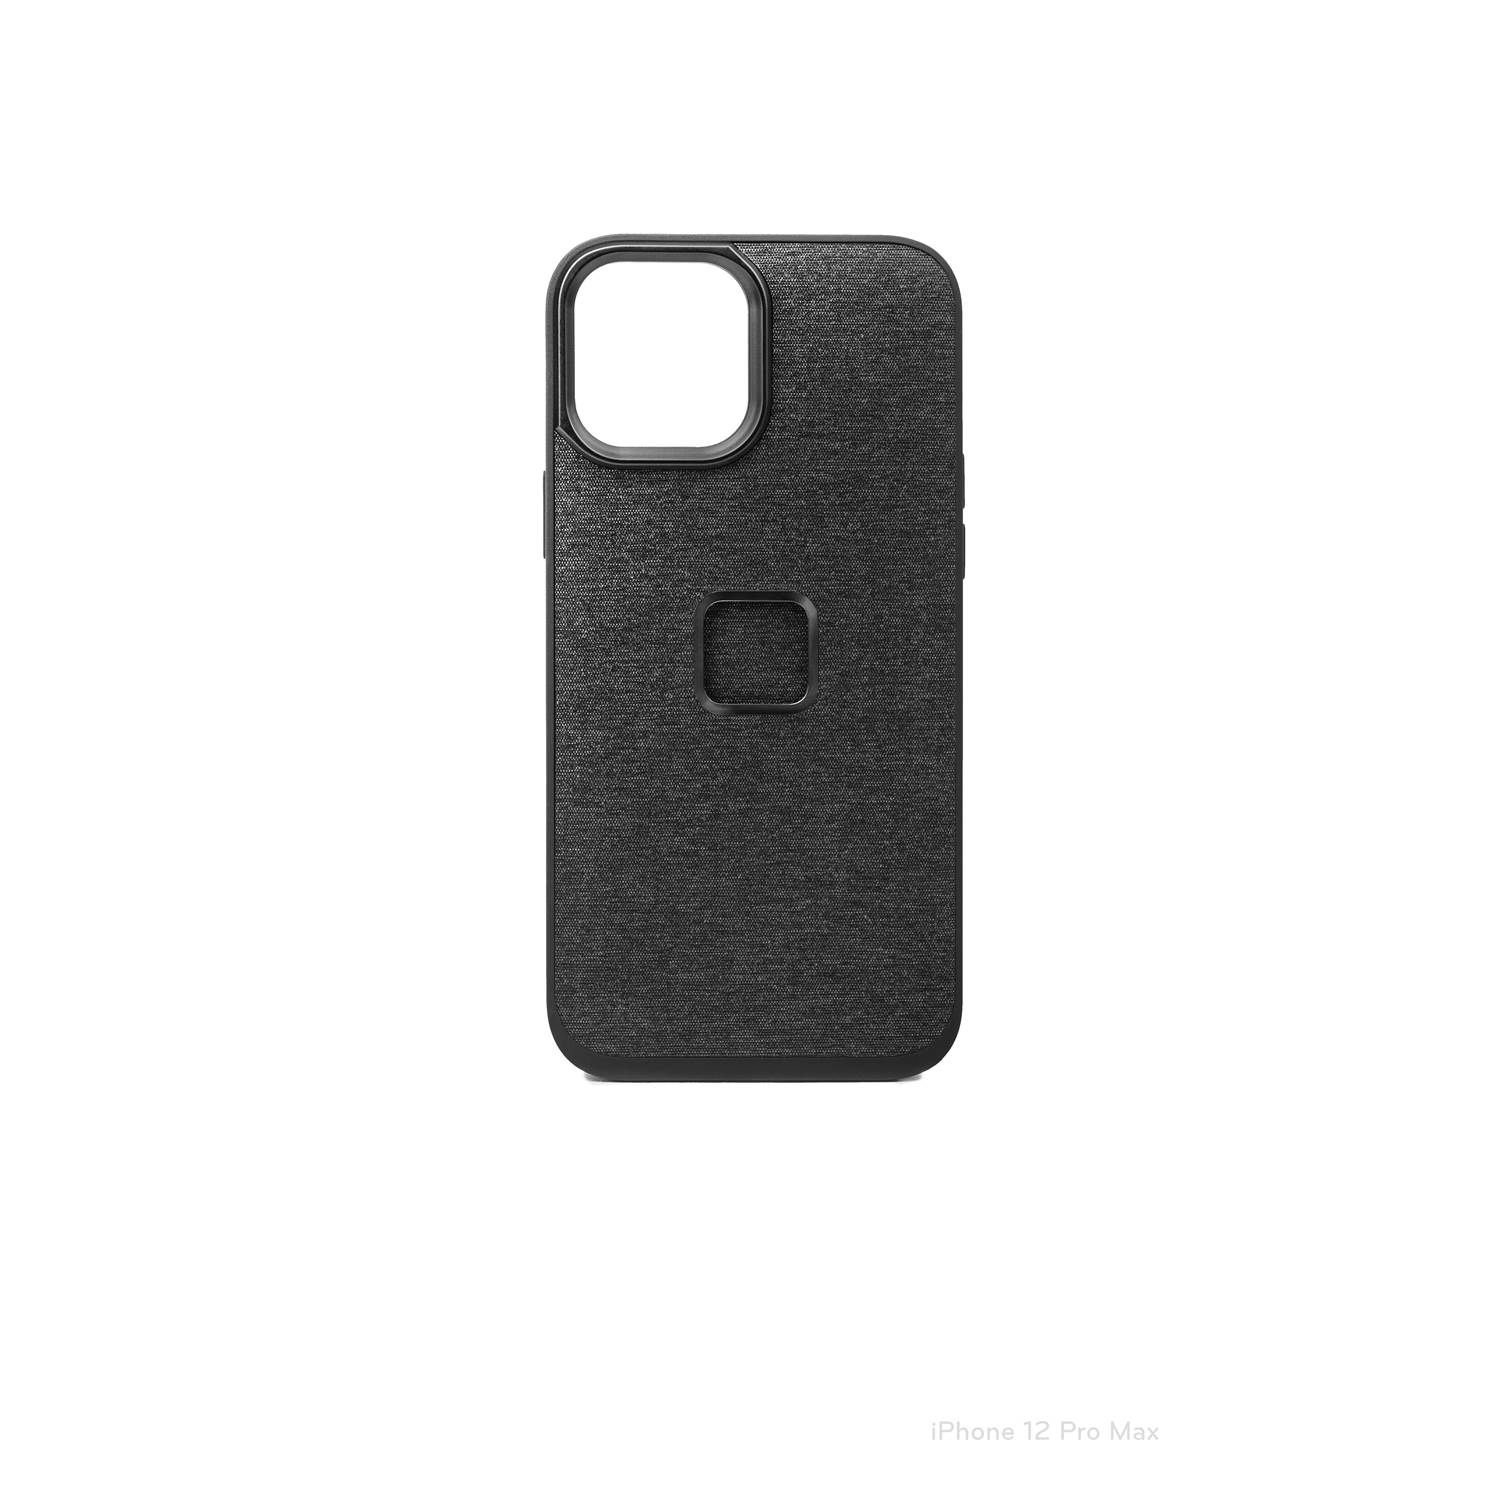 Peak Design Everyday Fabric Case iPhone 12 Pro Max - Charcoal